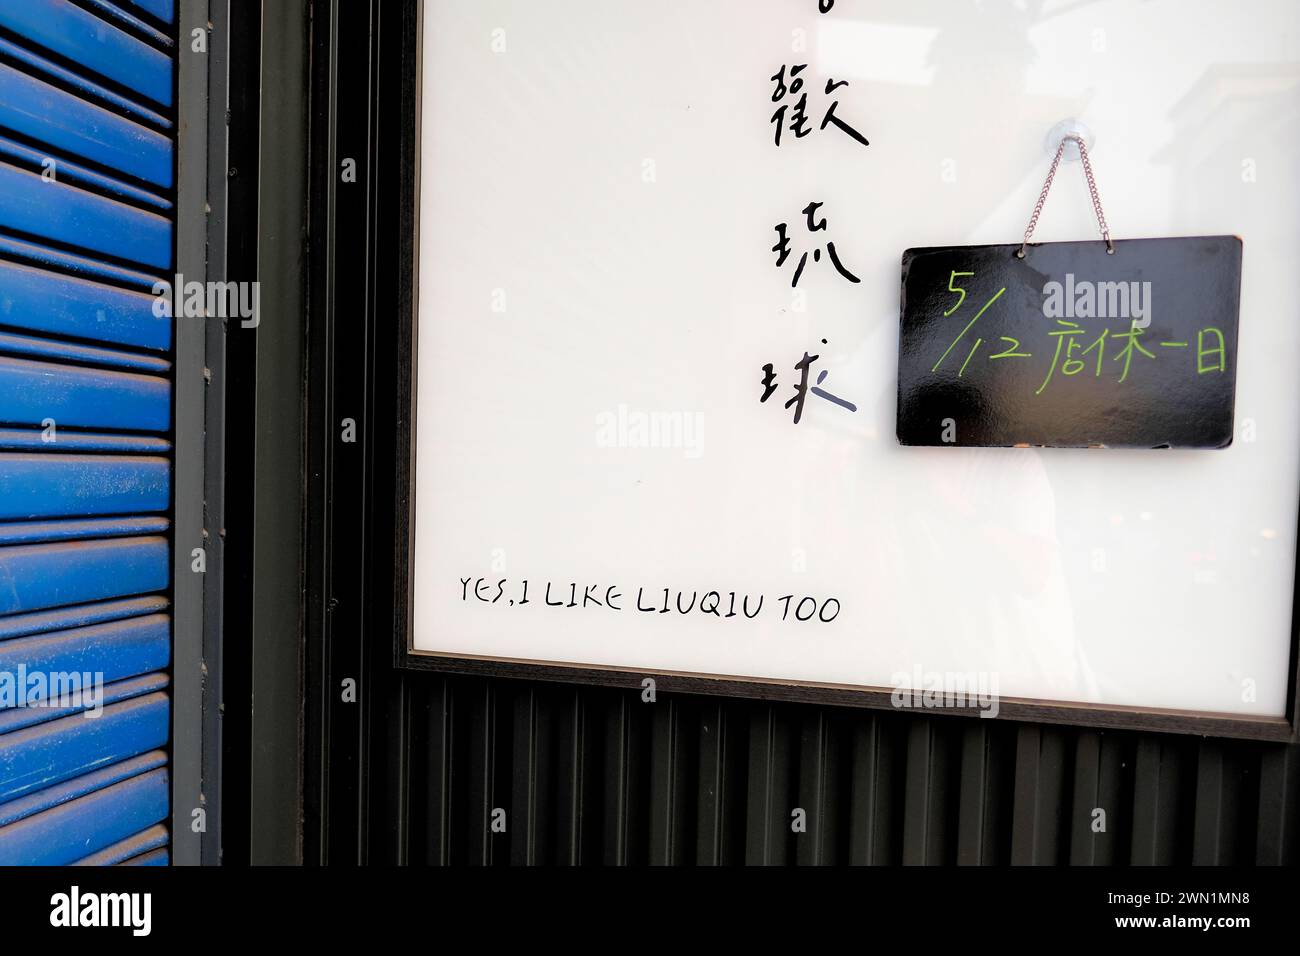 'Yes, I like Liuqiu too' on a sign outside a closed business establishment on the island of Xiaoliuqiu off the coast of mainland Taiwan; local pride. Stock Photo